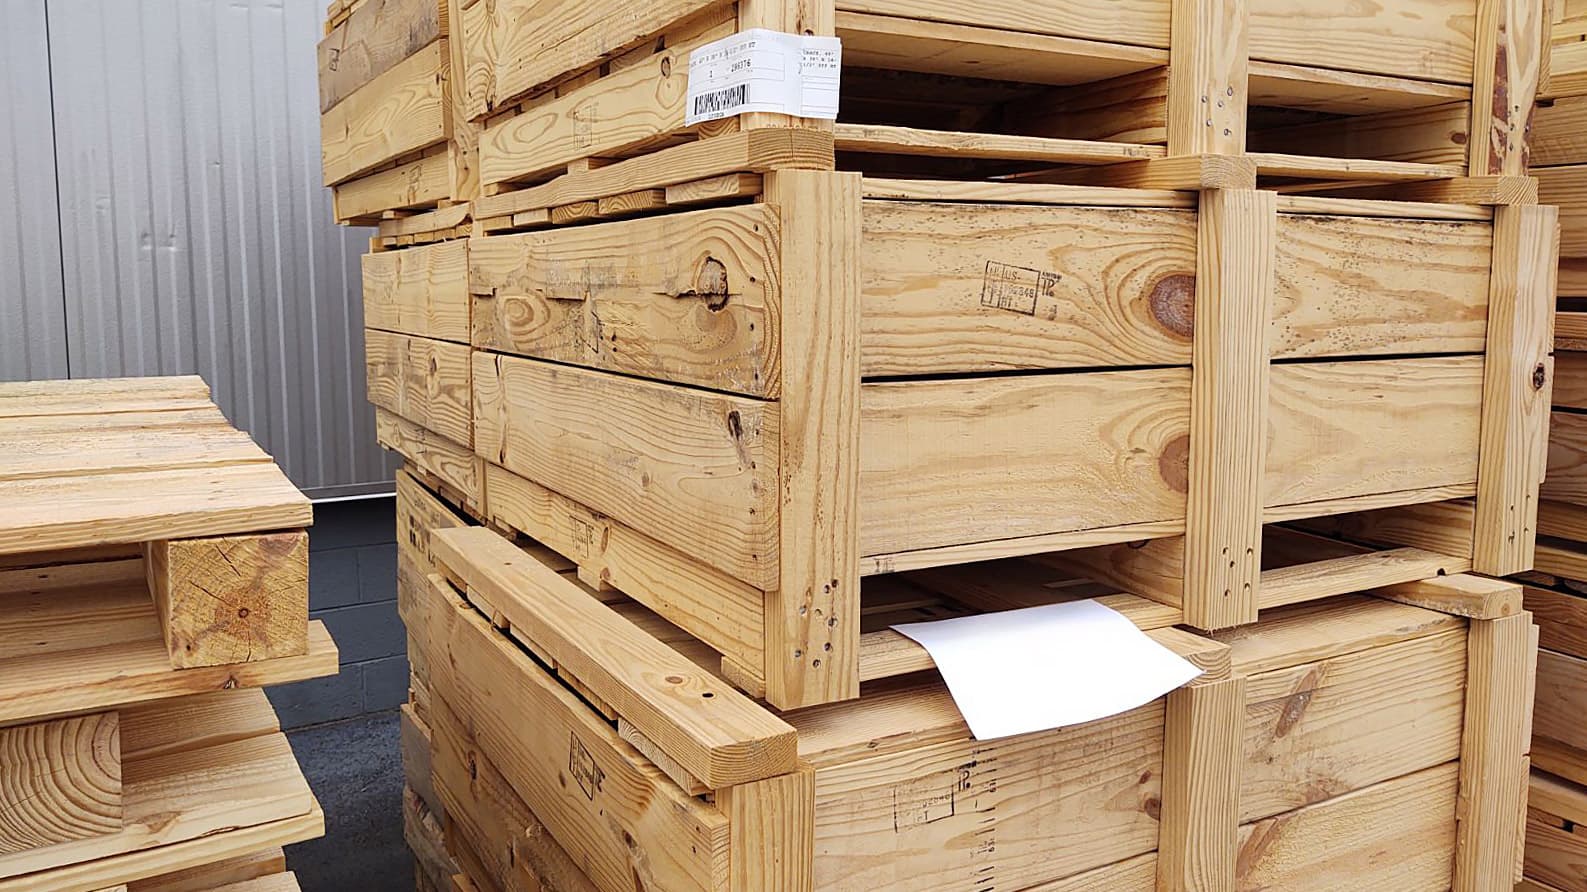 Custom crates arranged in stacks